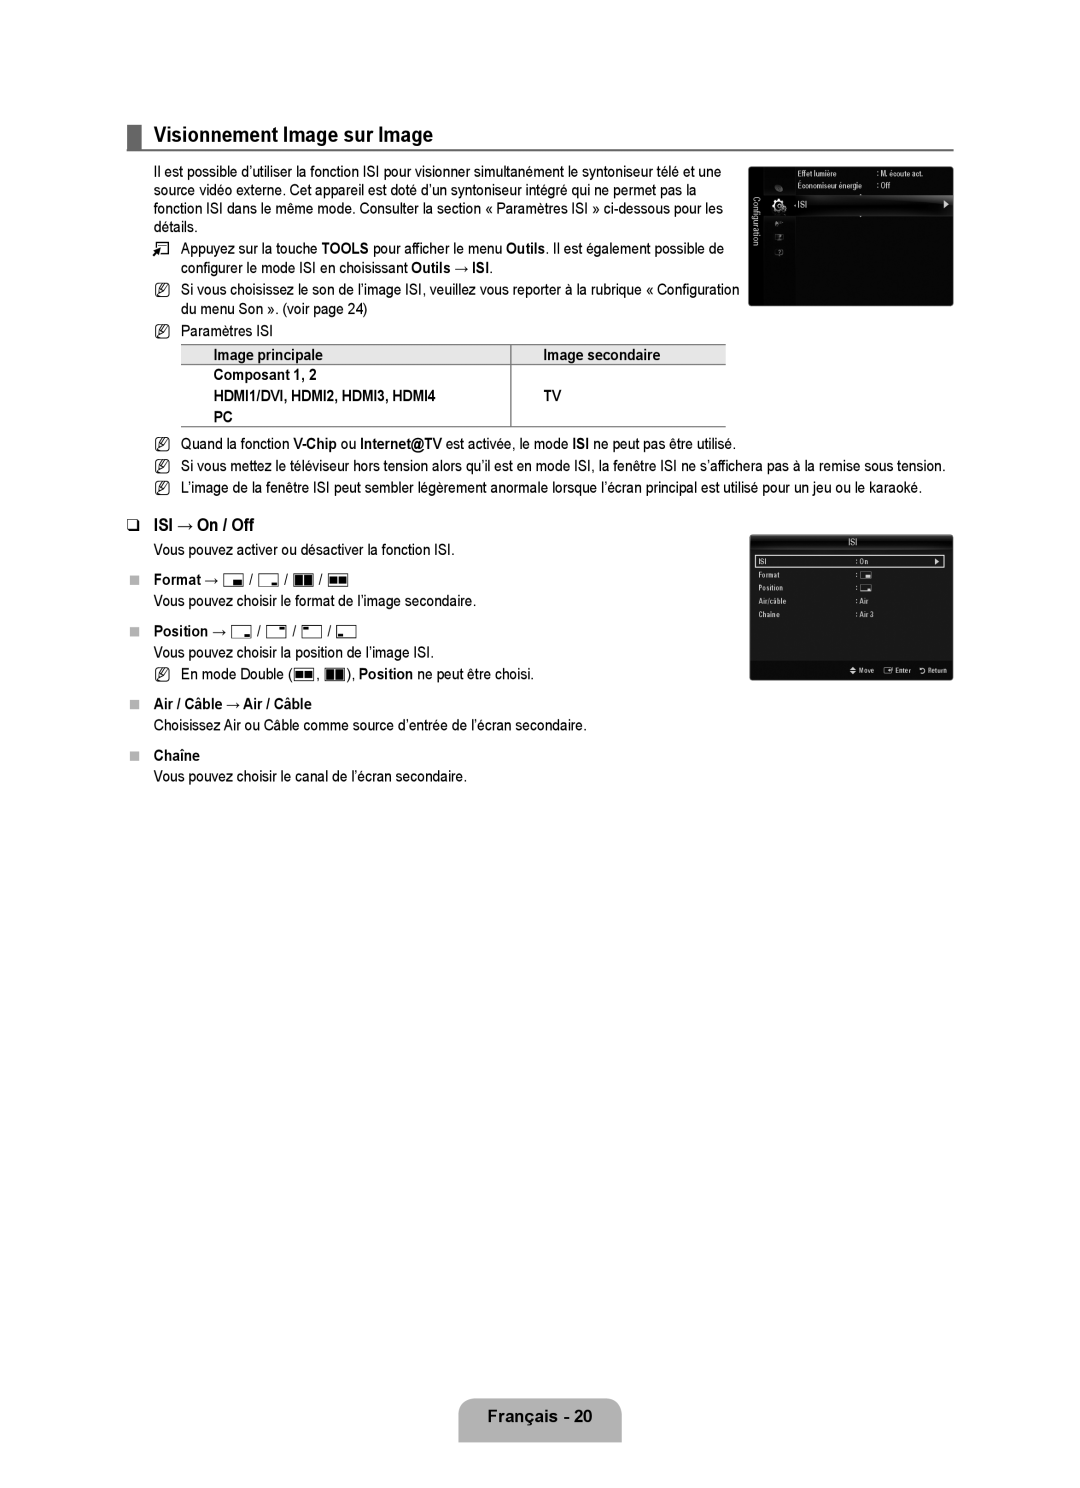 Samsung LN6B60 user manual Visionnement Image sur Image, ISI → On / Off 